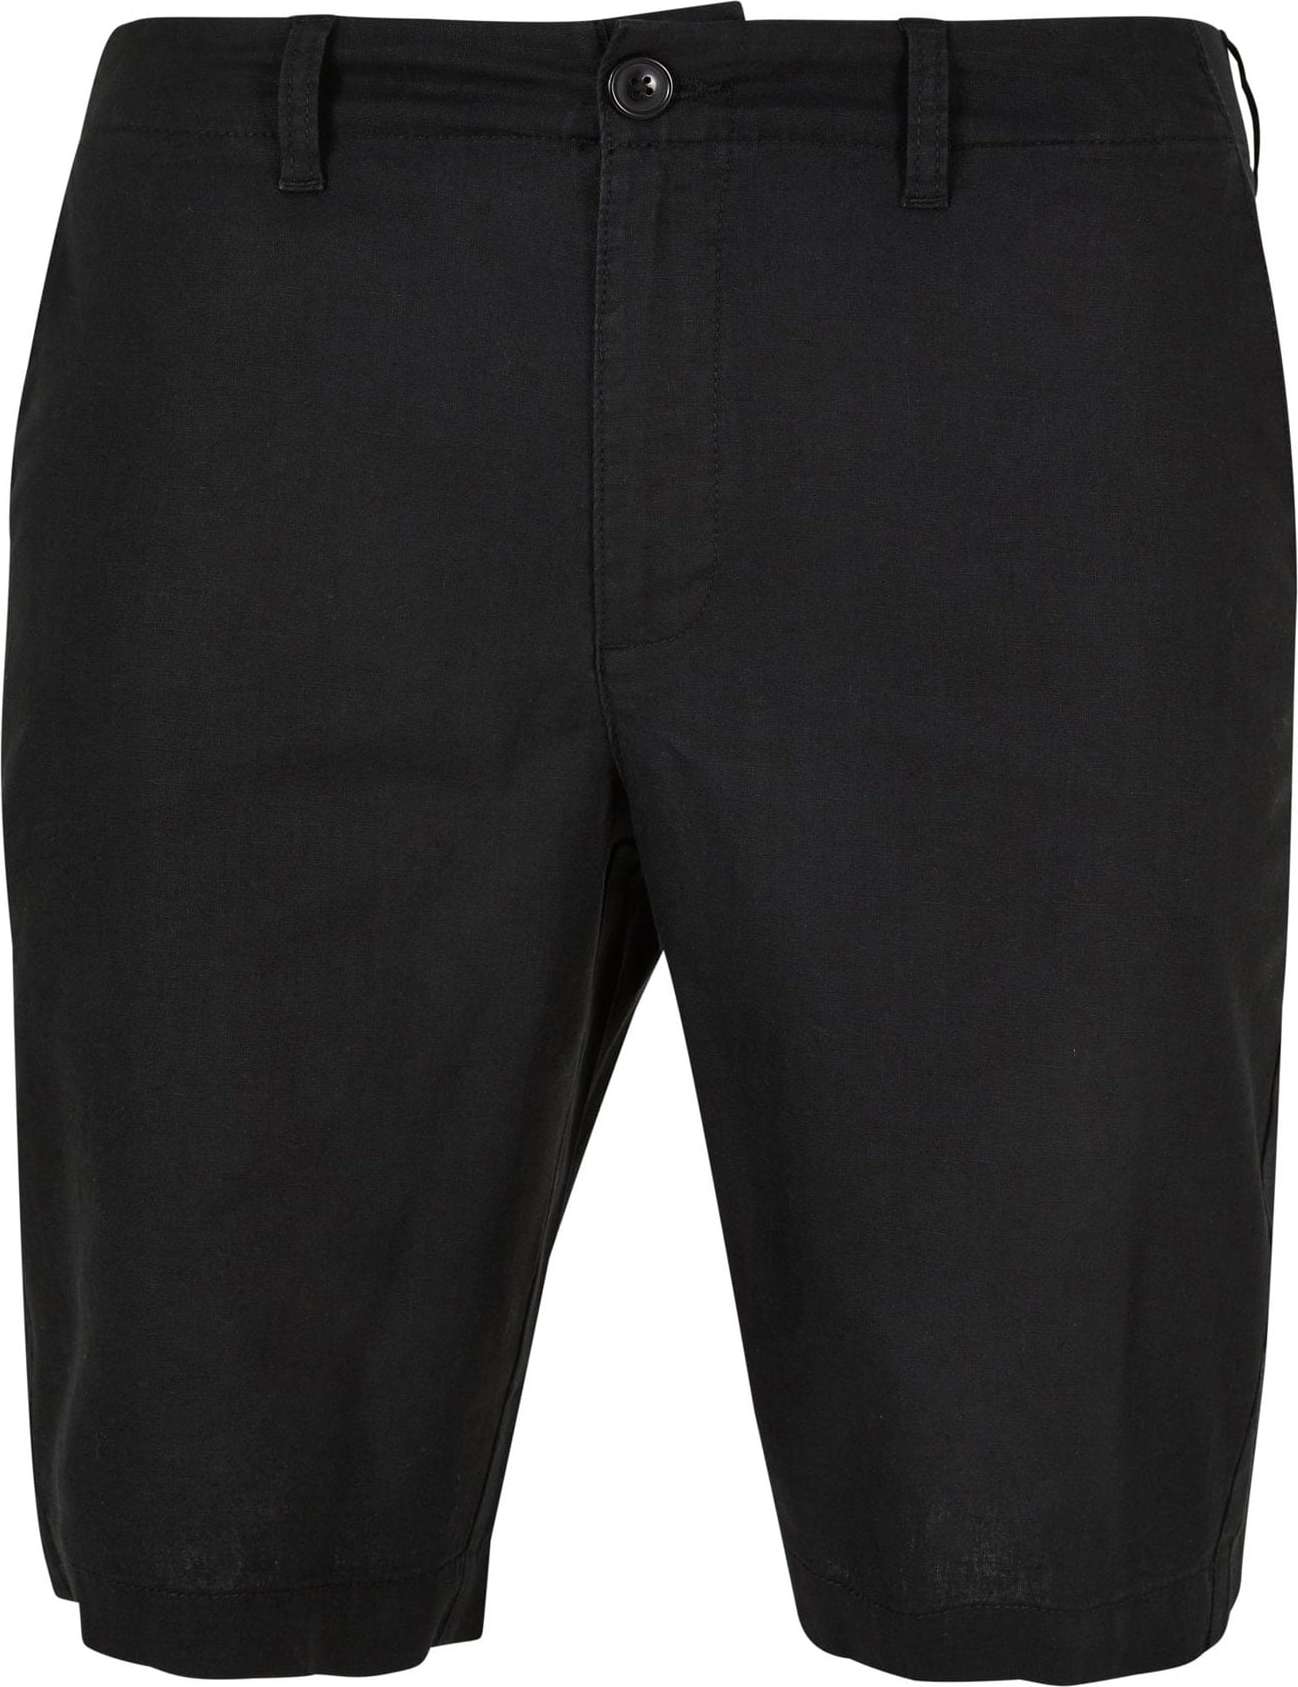 Chino kalhoty Urban Classics černá